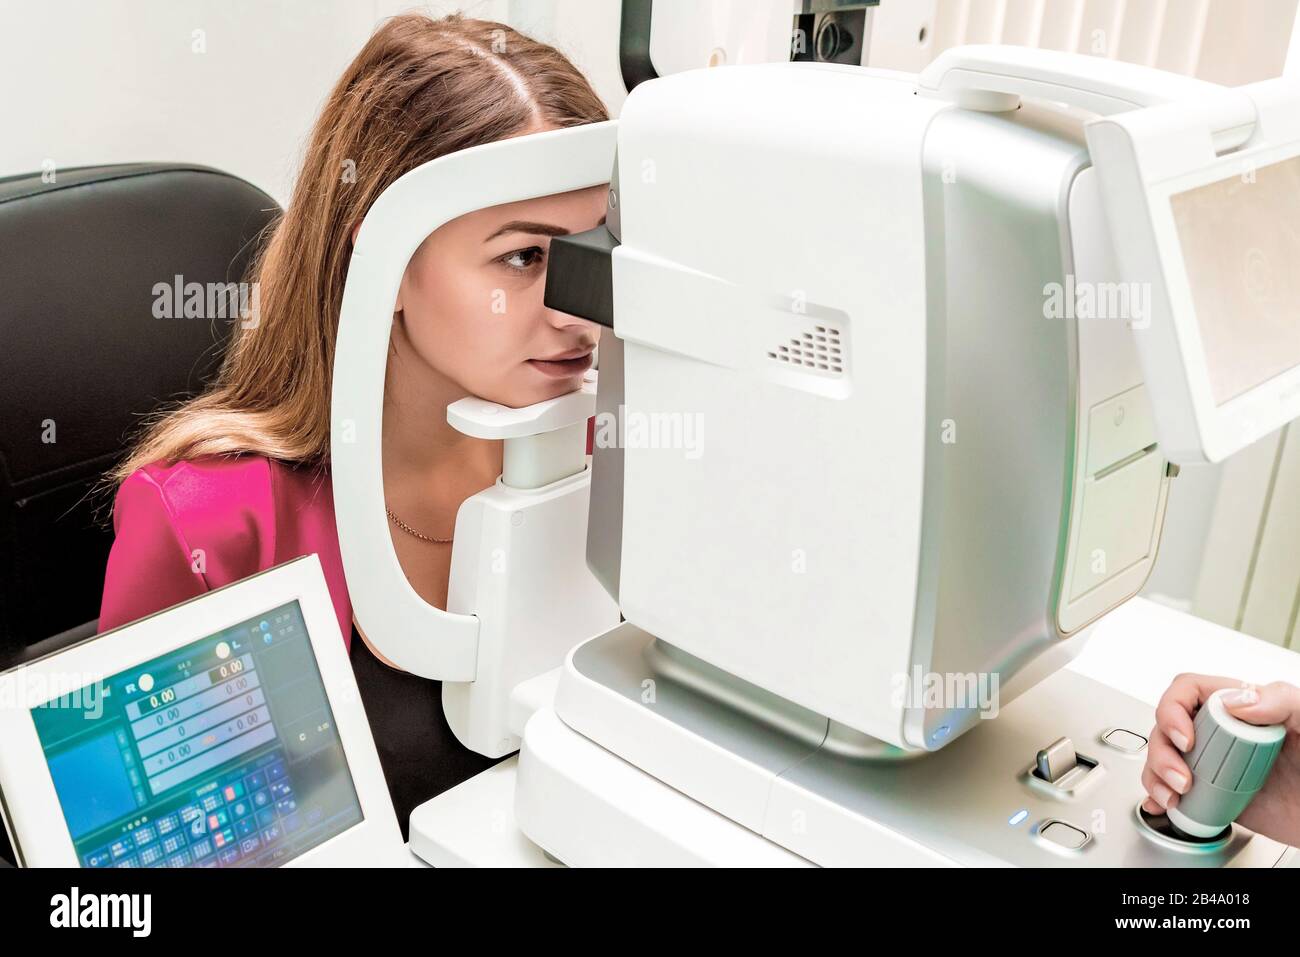 https://c8.alamy.com/comp/2B4A018/beautiful-woman-having-an-eye-lens-exam-with-auto-refractor-keratometer-2B4A018.jpg